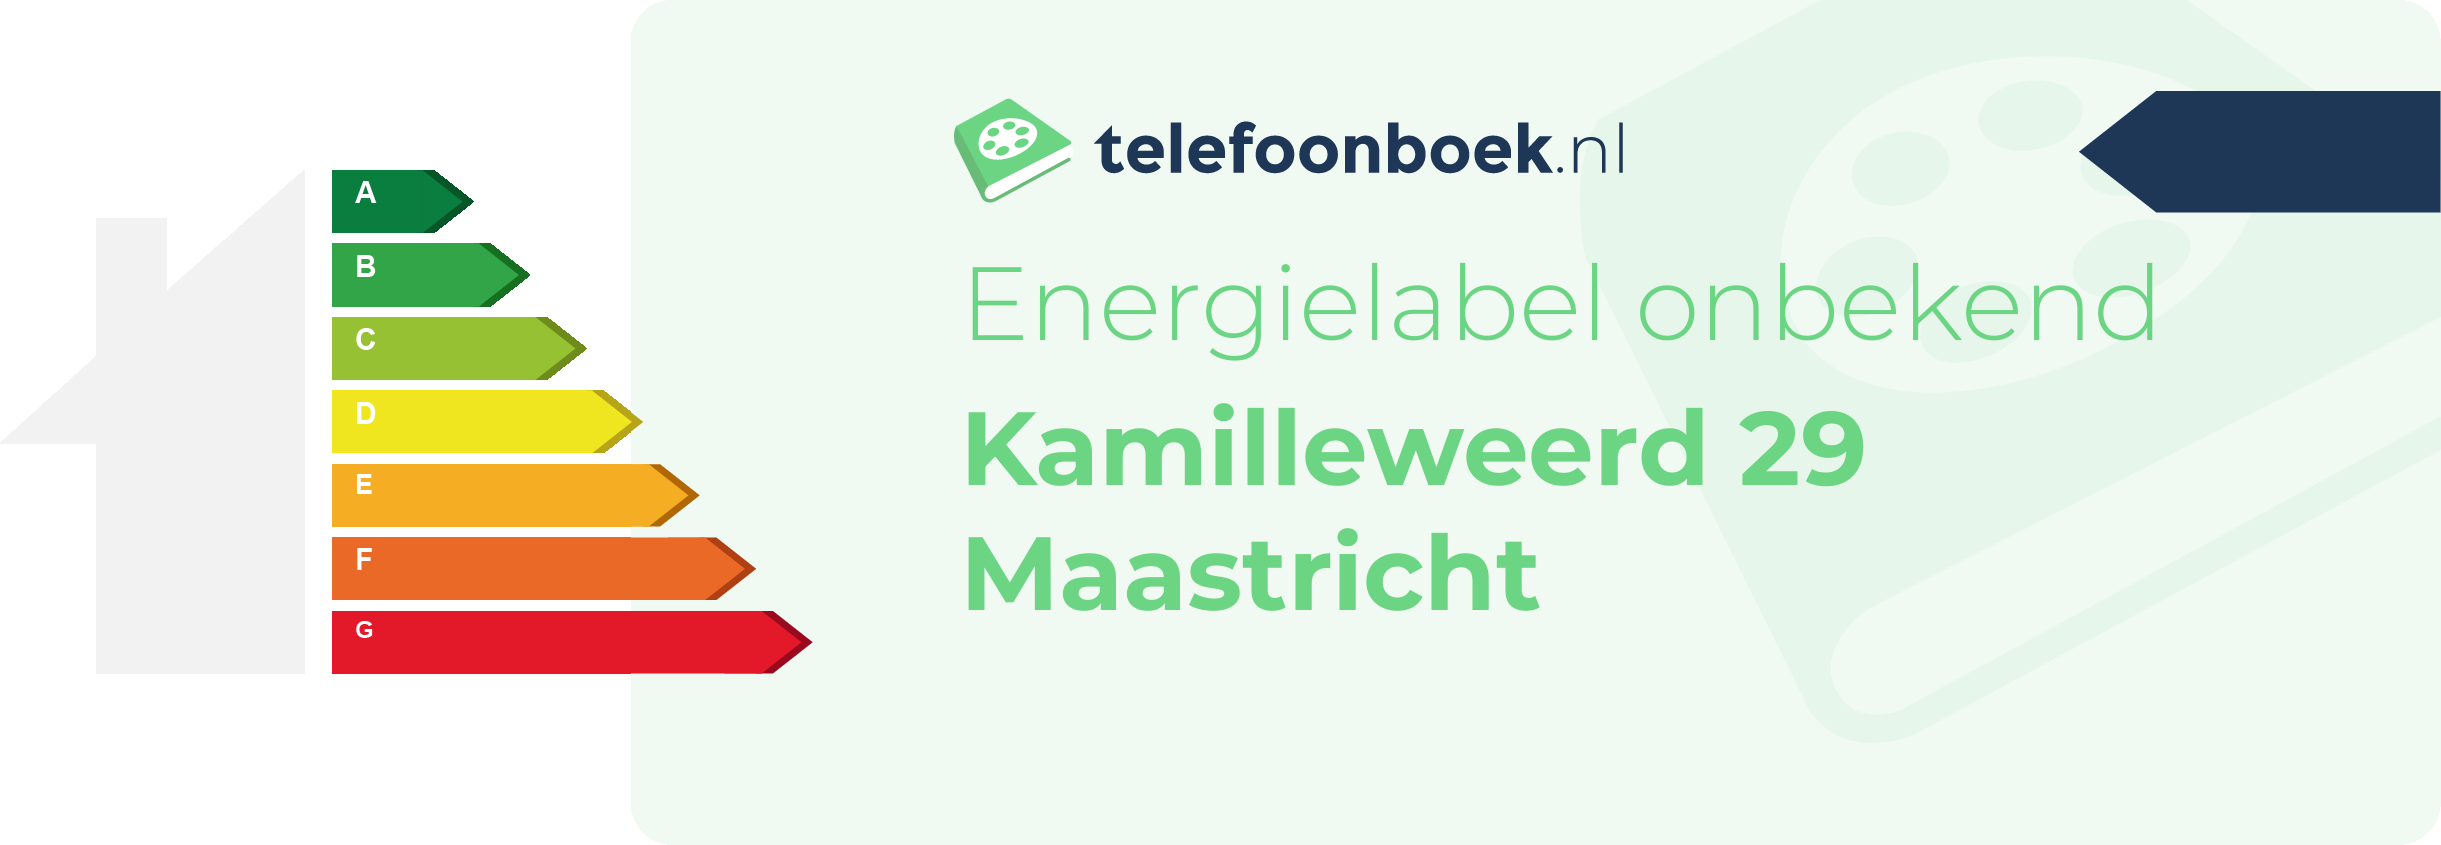 Energielabel Kamilleweerd 29 Maastricht